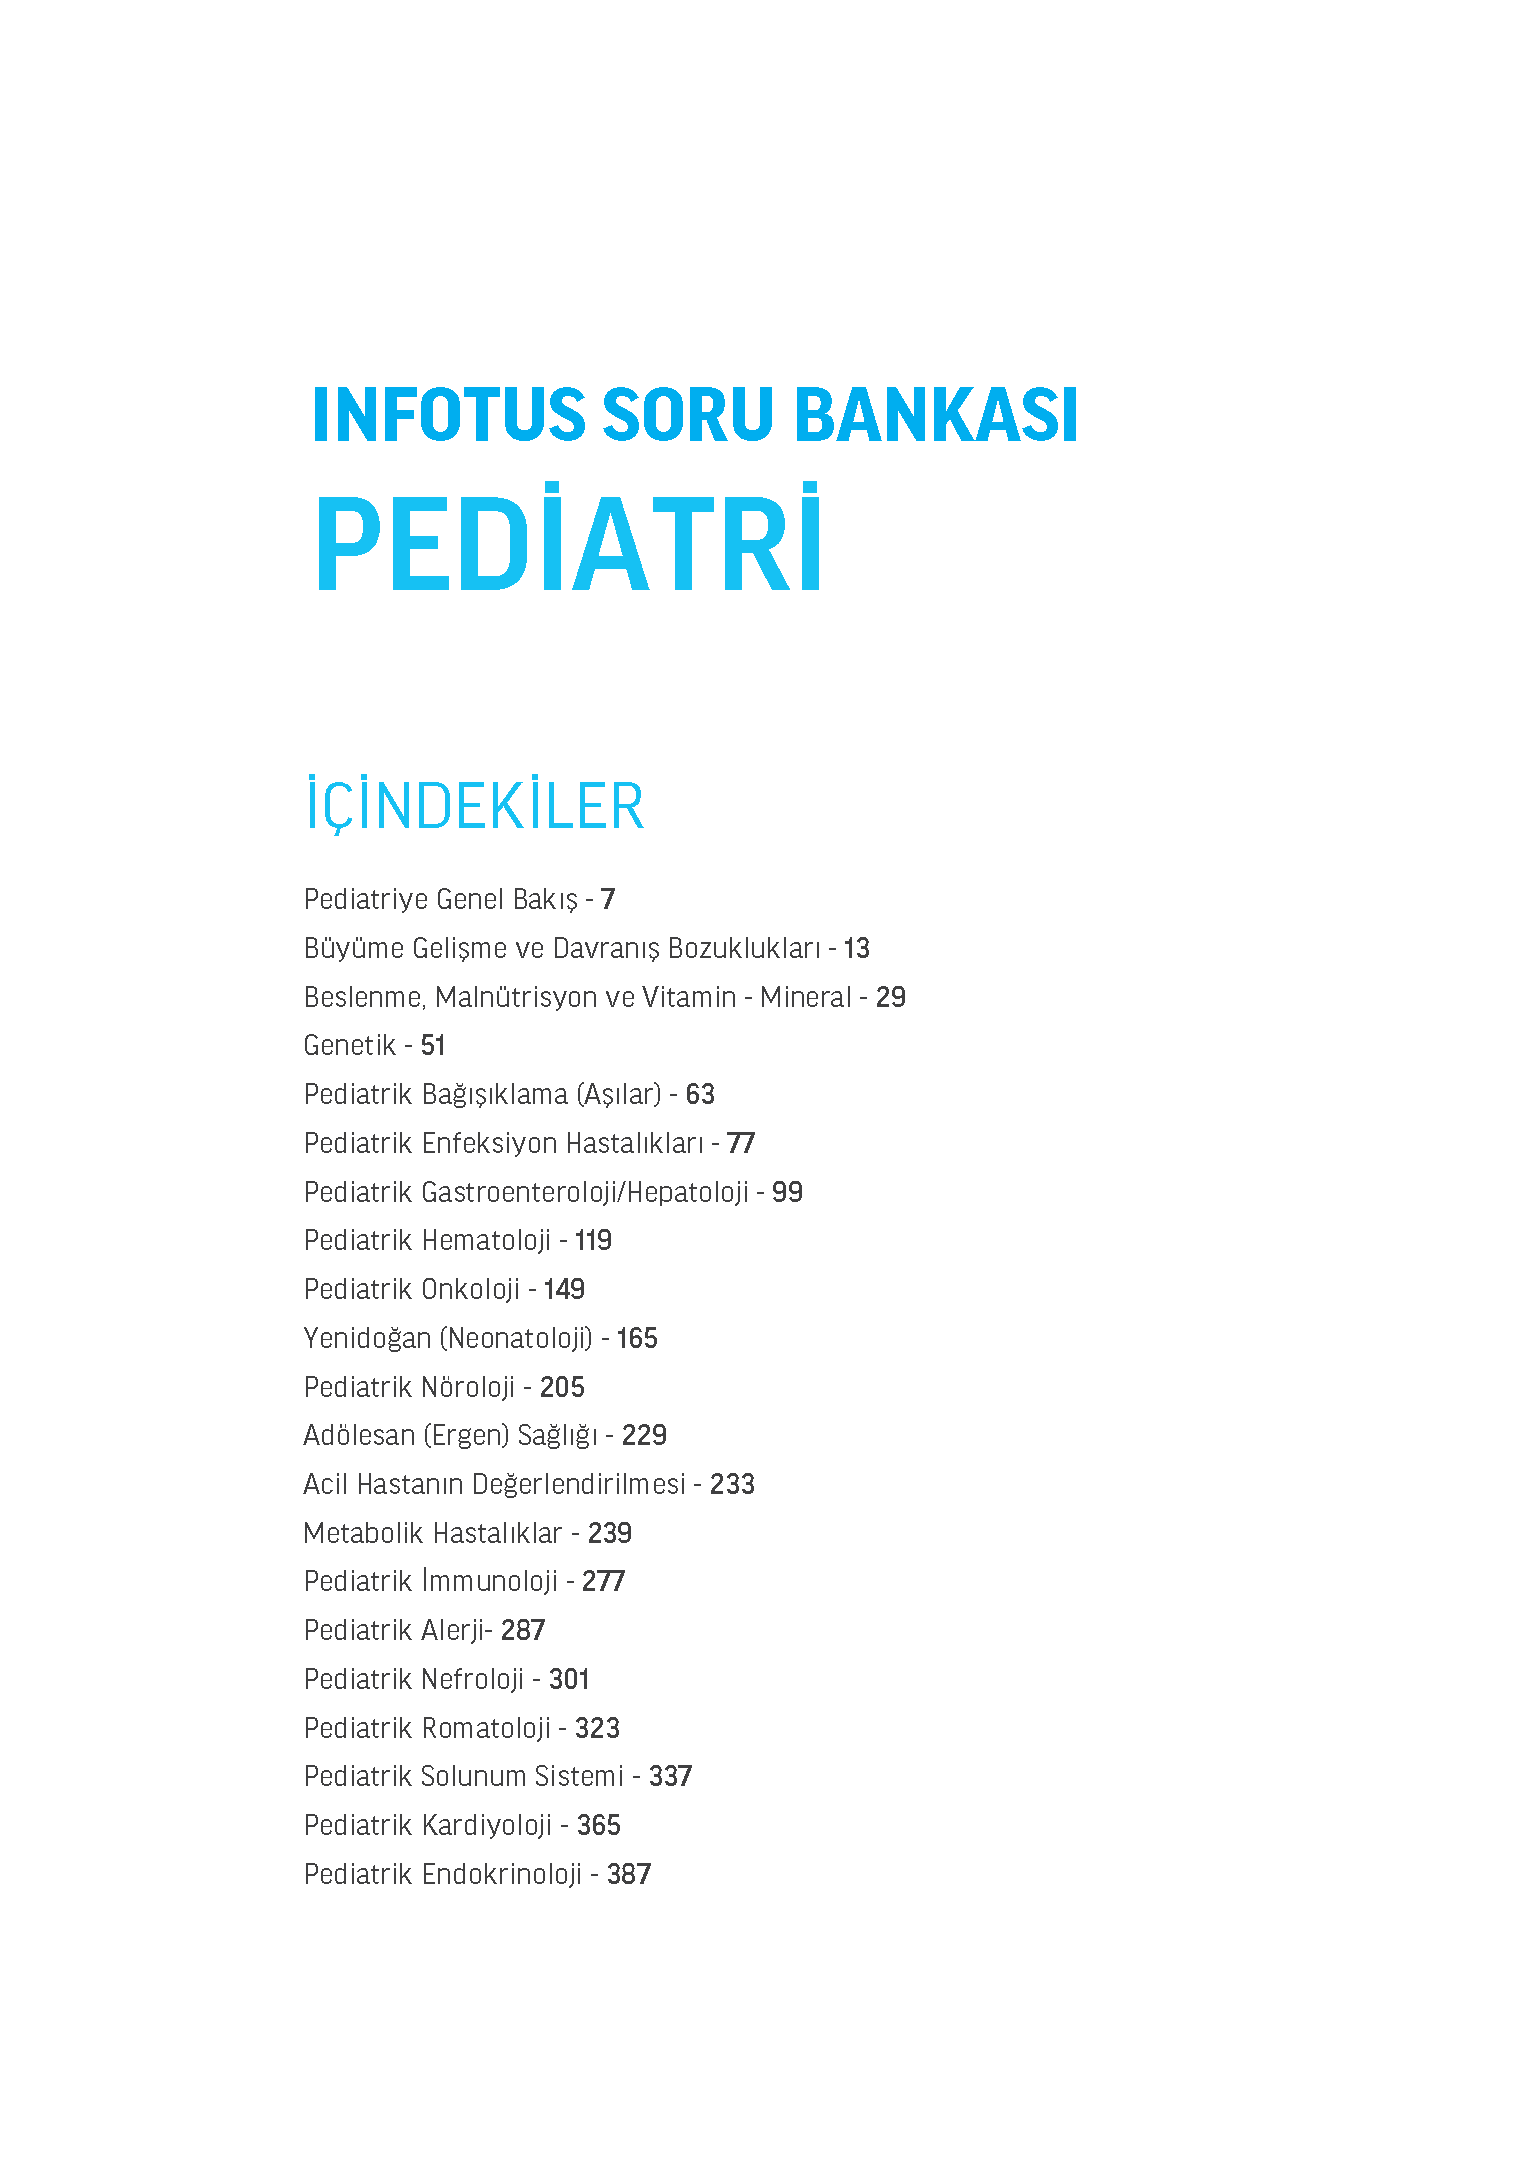 INFOTUS SORU BANKASI PEDIATRI_Page_003